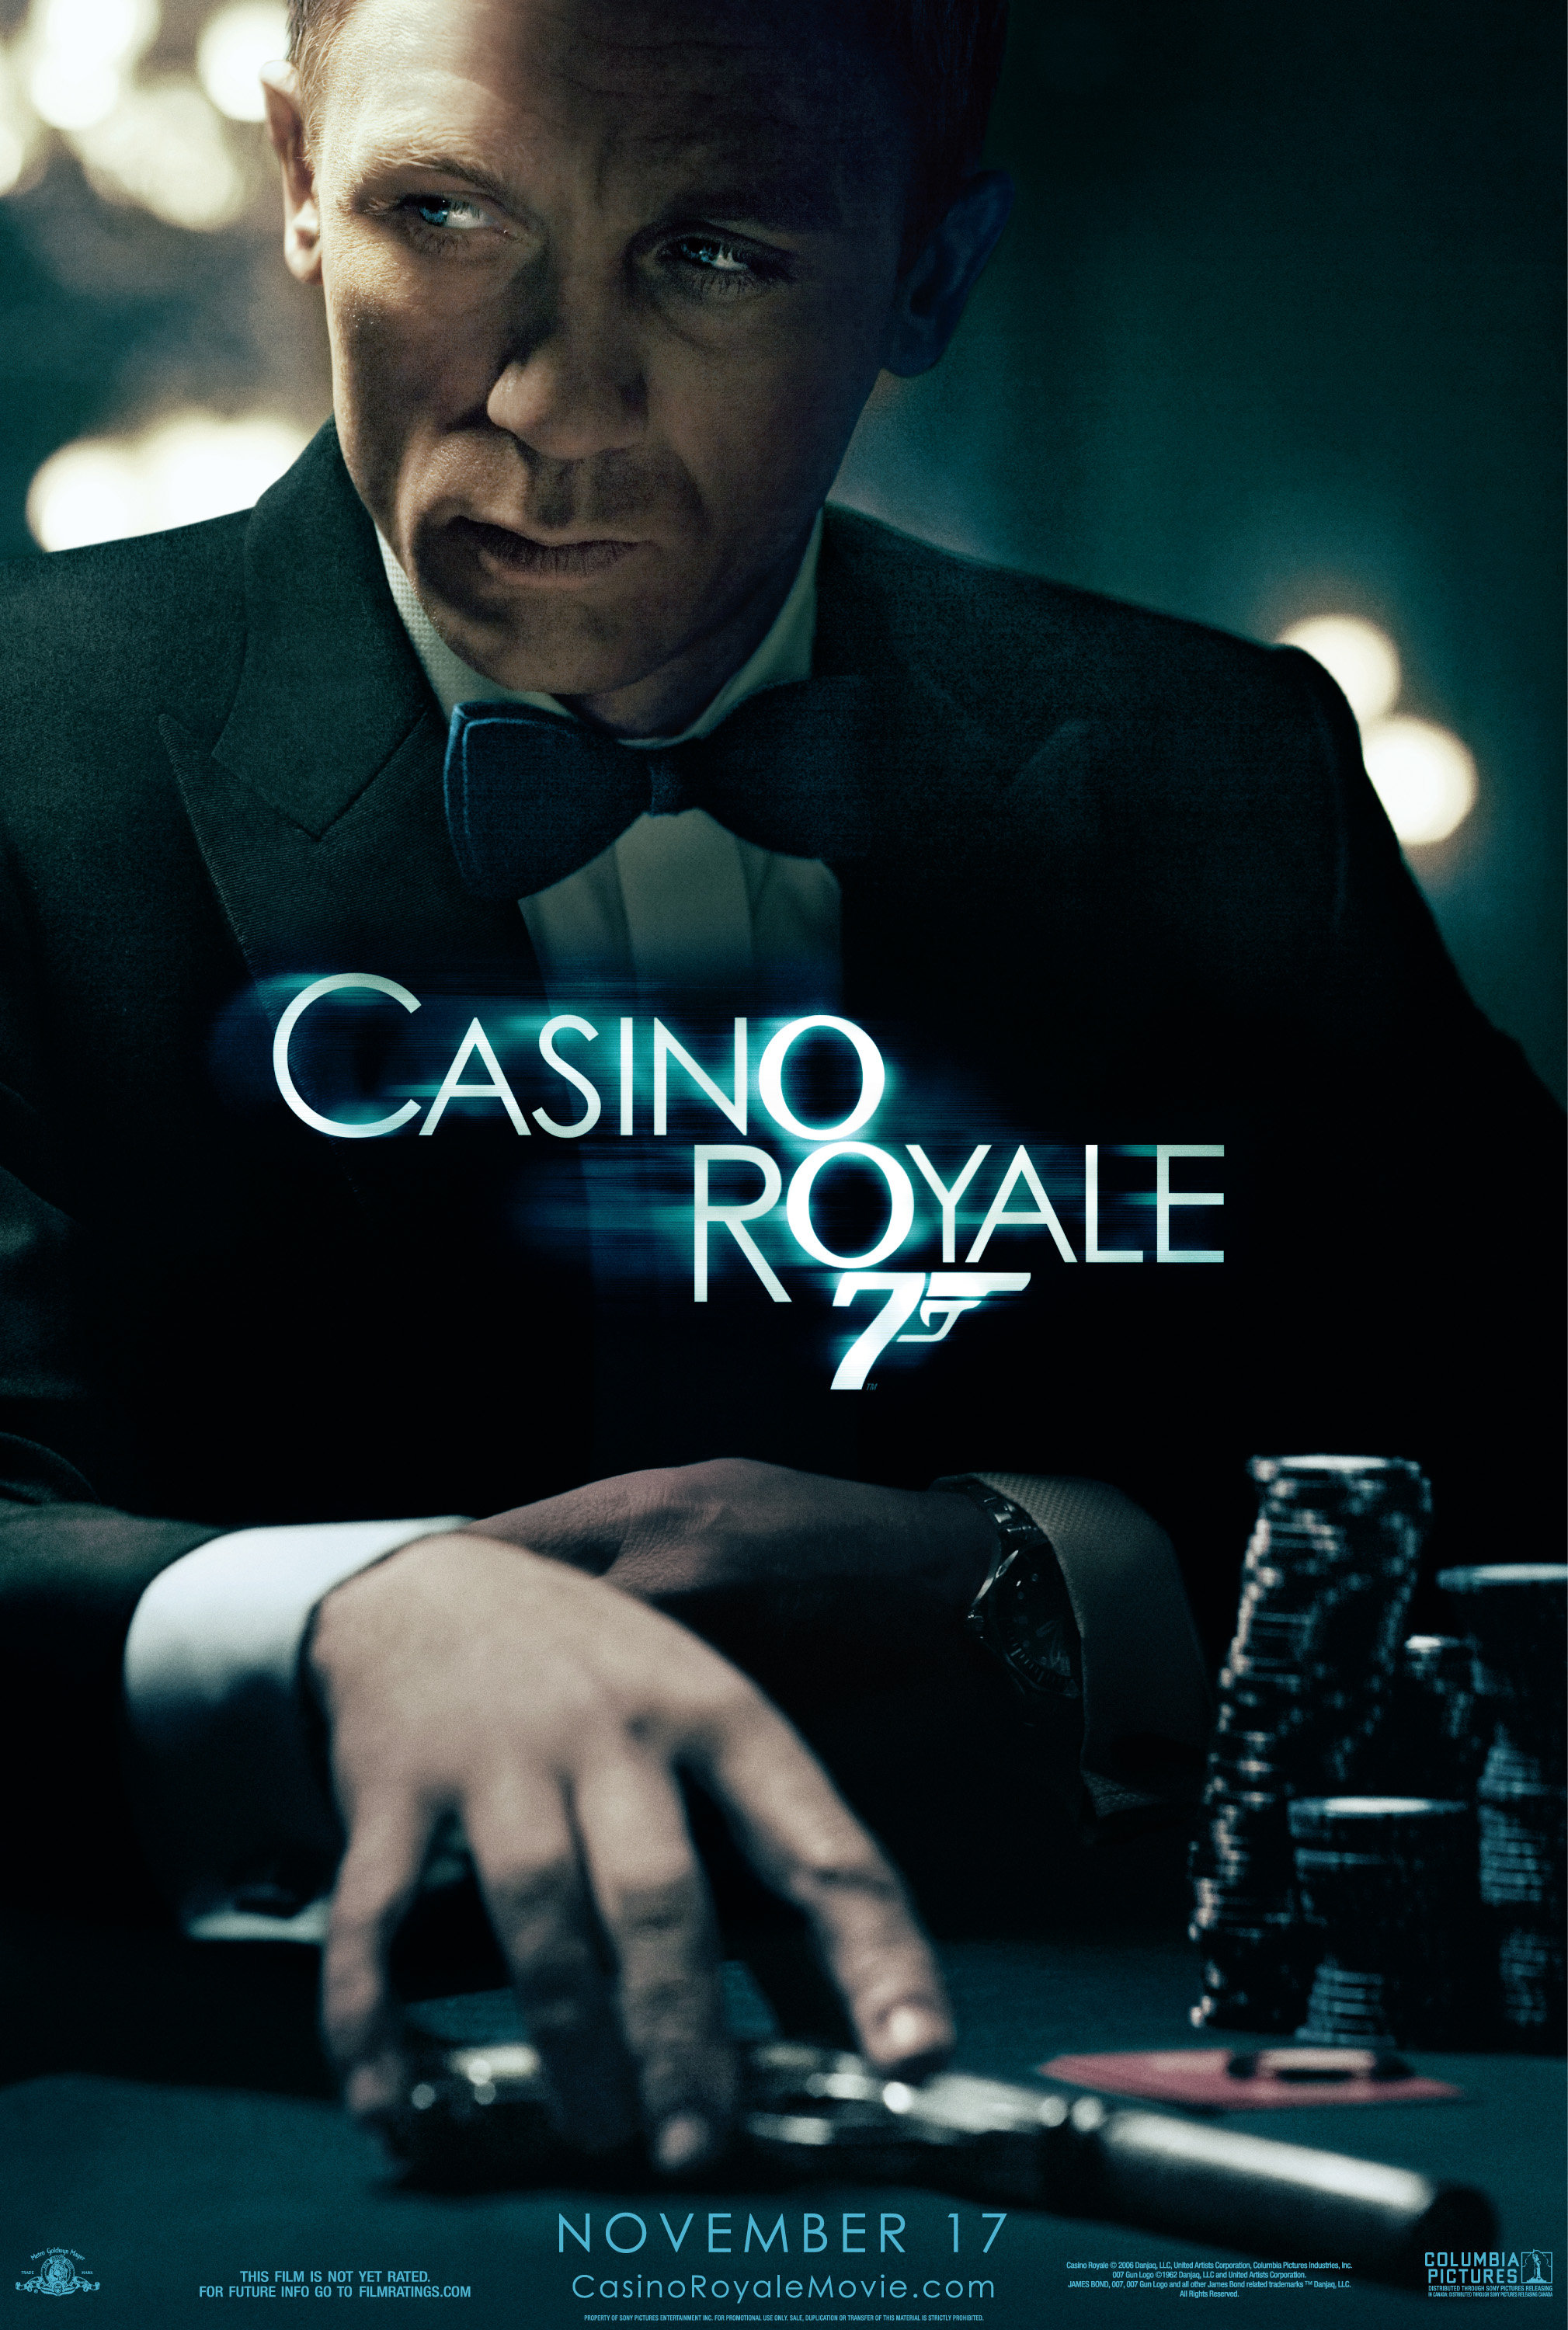 Casino Royale HD wallpapers, Desktop wallpaper - most viewed